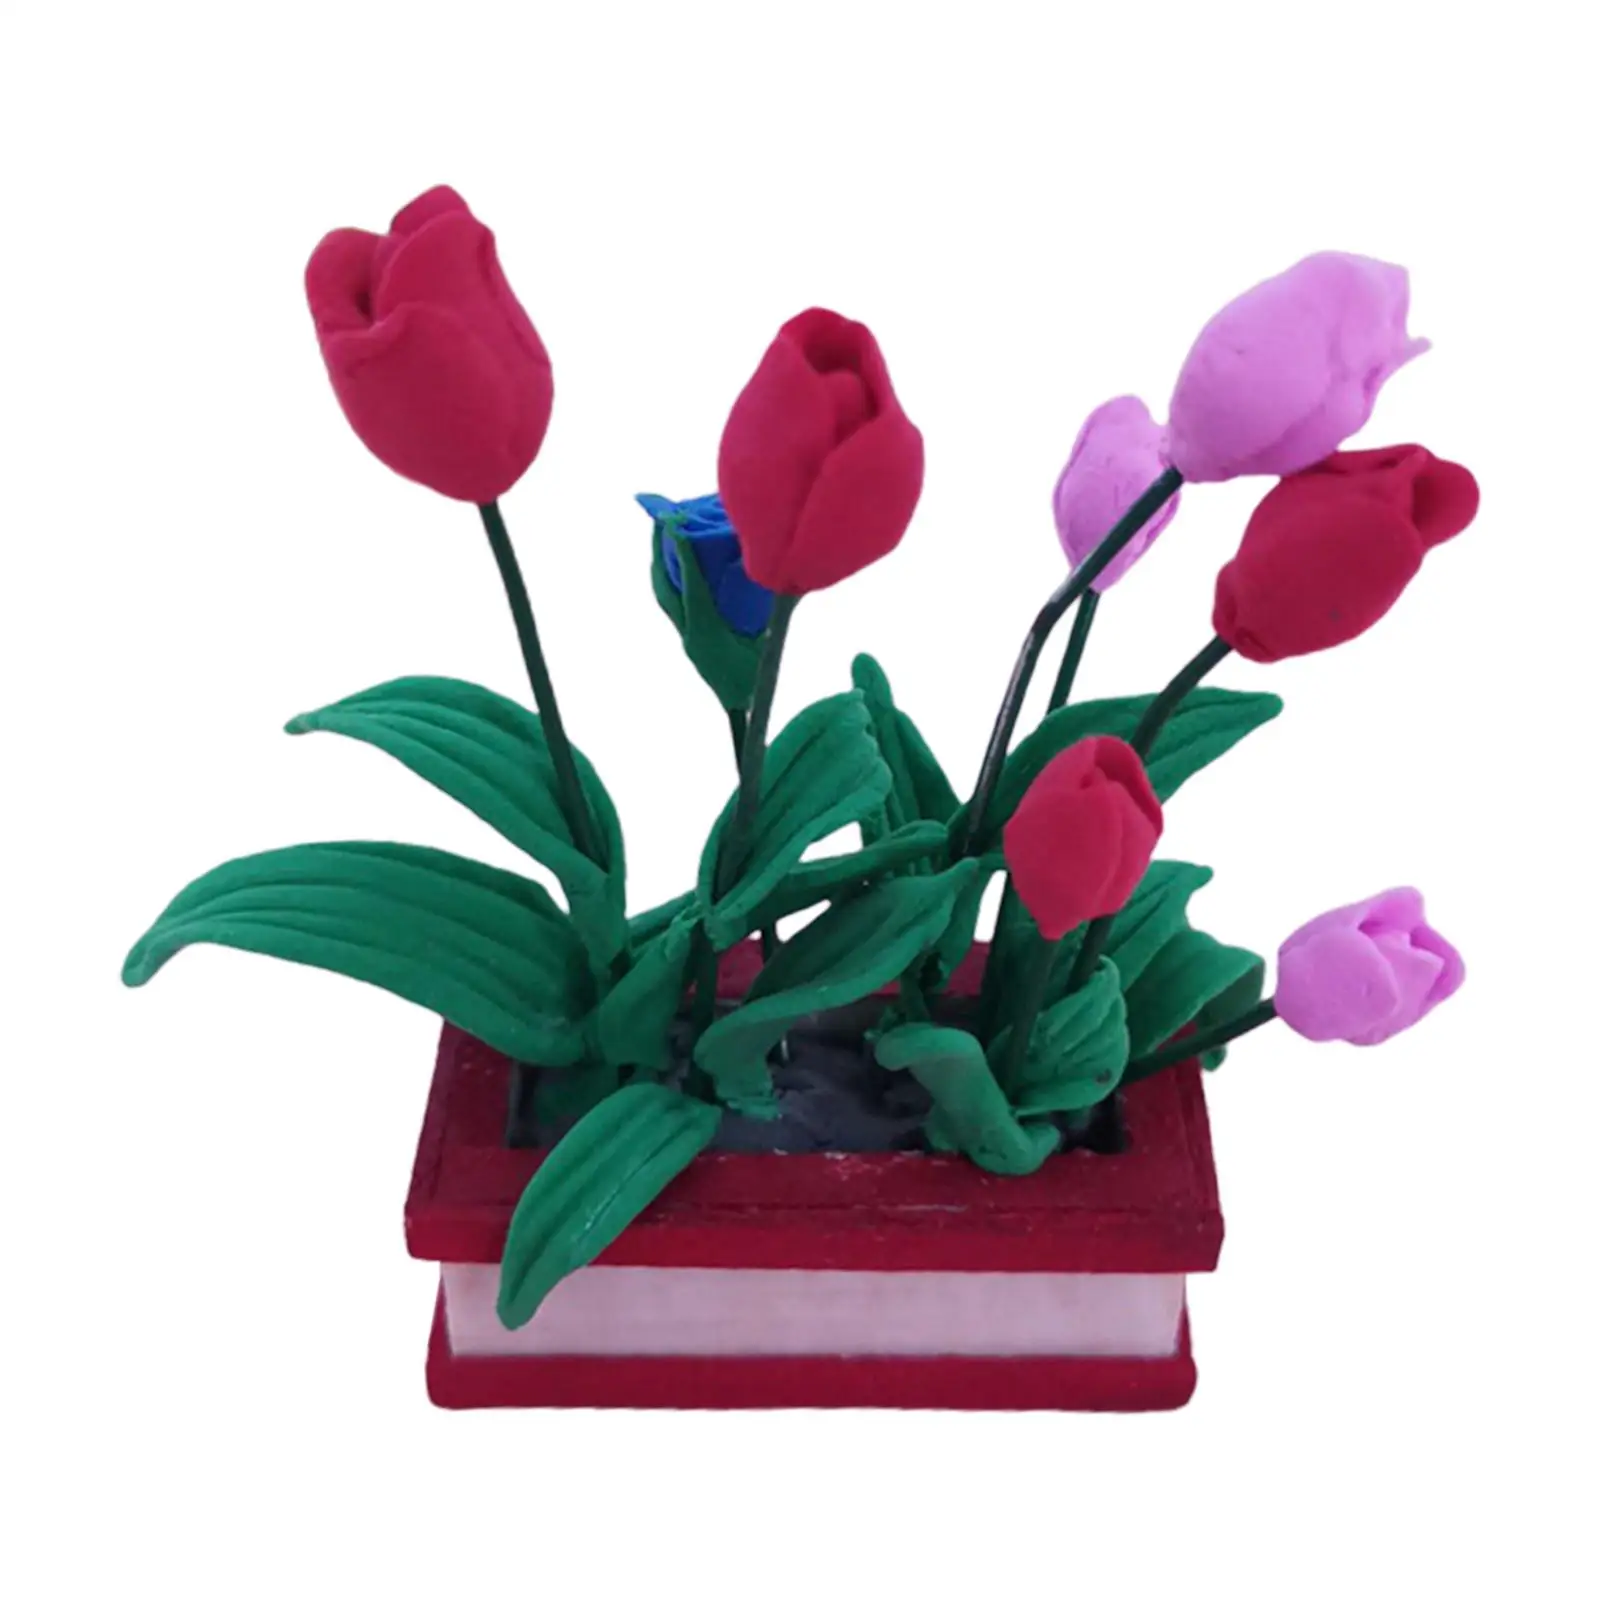 Dollhouse Miniature Flowers Scenery Supplies Greenery Ornament Mini Vase Dollhouse Flower for Diorama Micro Landscape Decoration